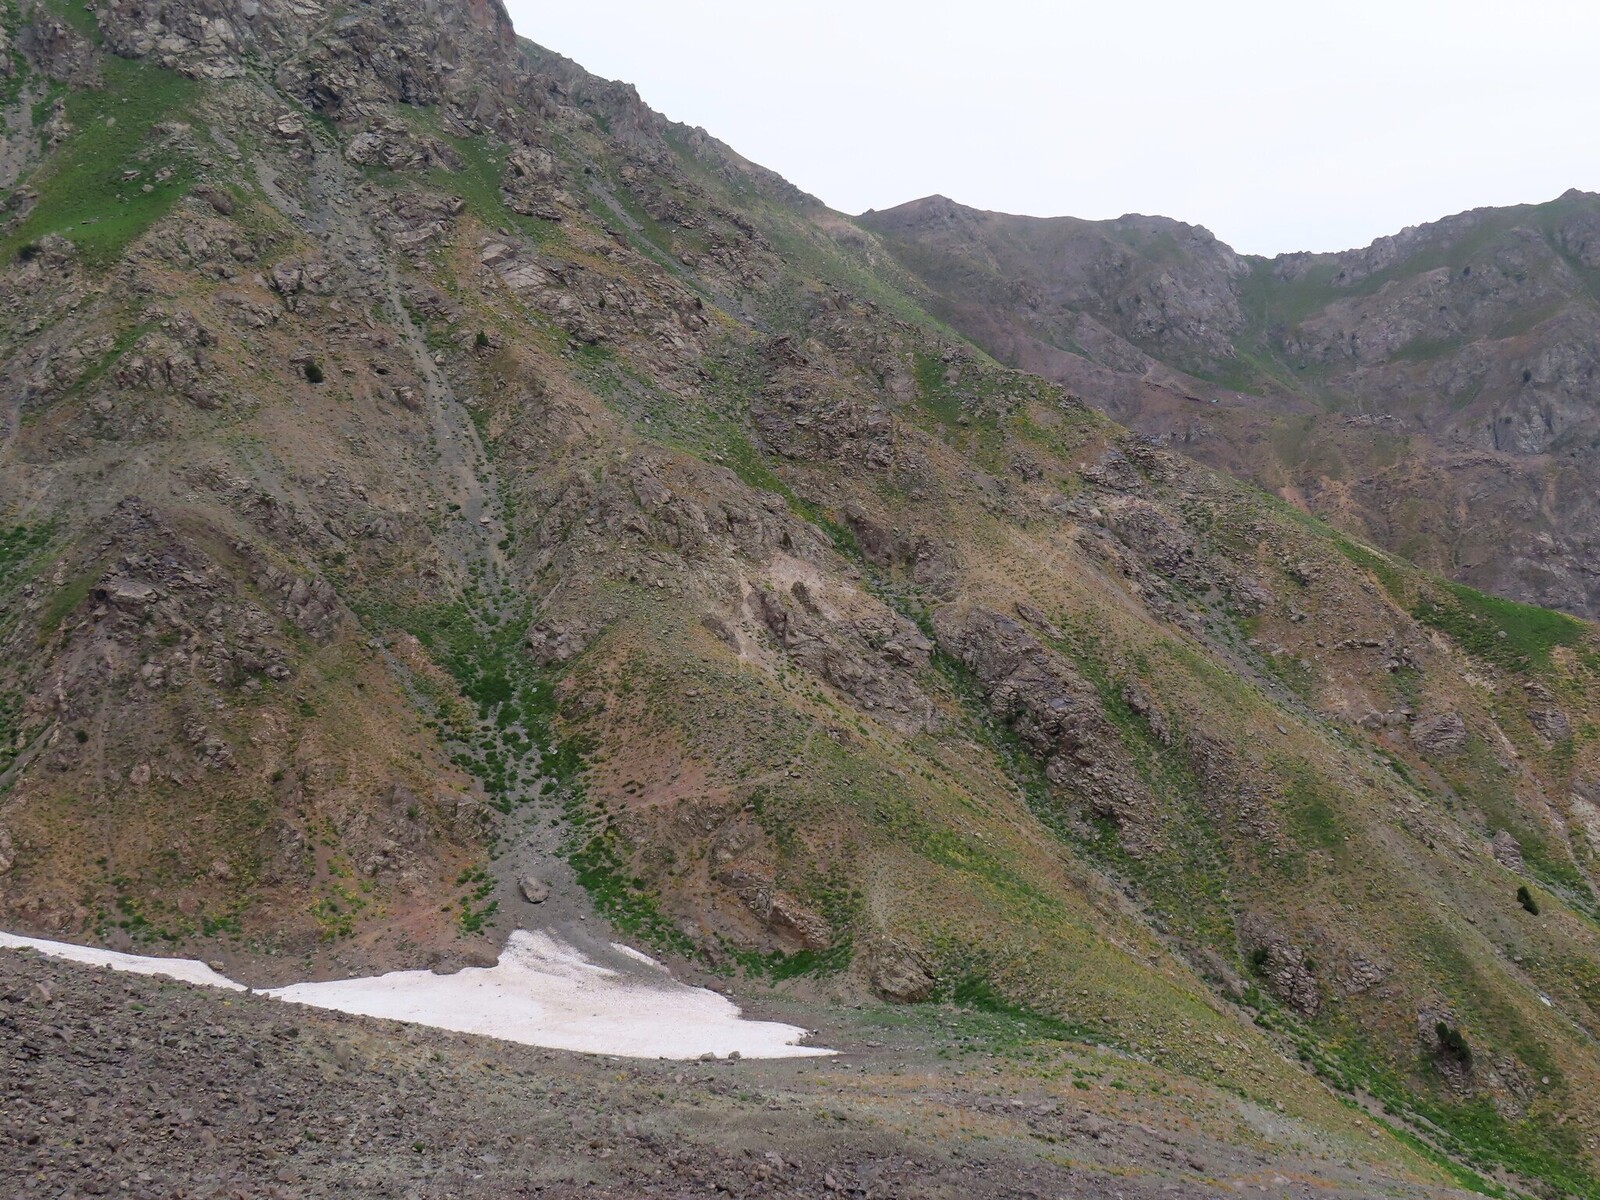 вид назад, тропы, спускающиеся с перевала backward view, paths descending from the pass